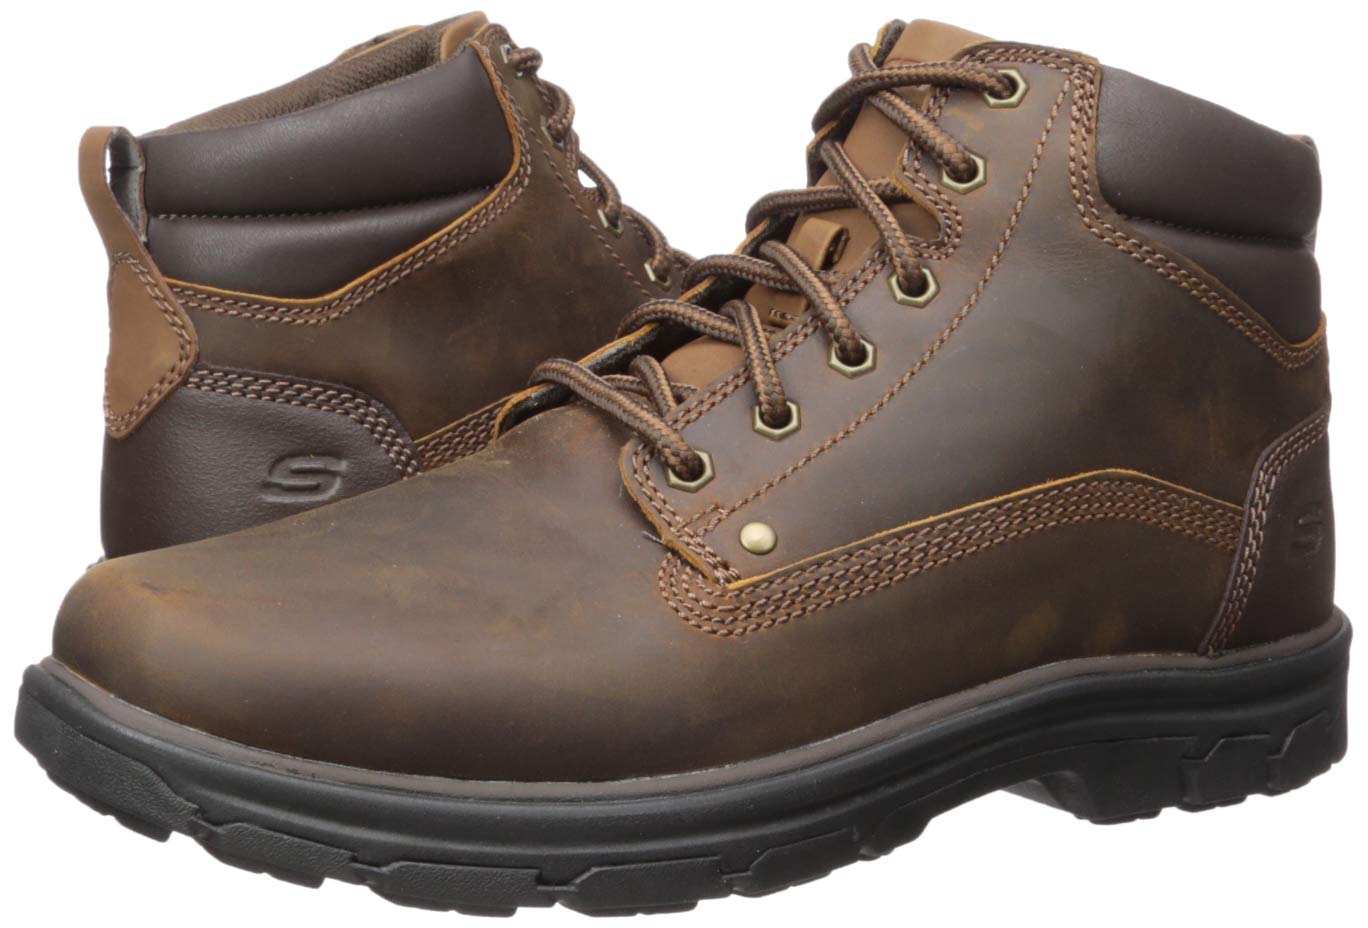 Skechers Men's Segment-Garnet Hiking Boot